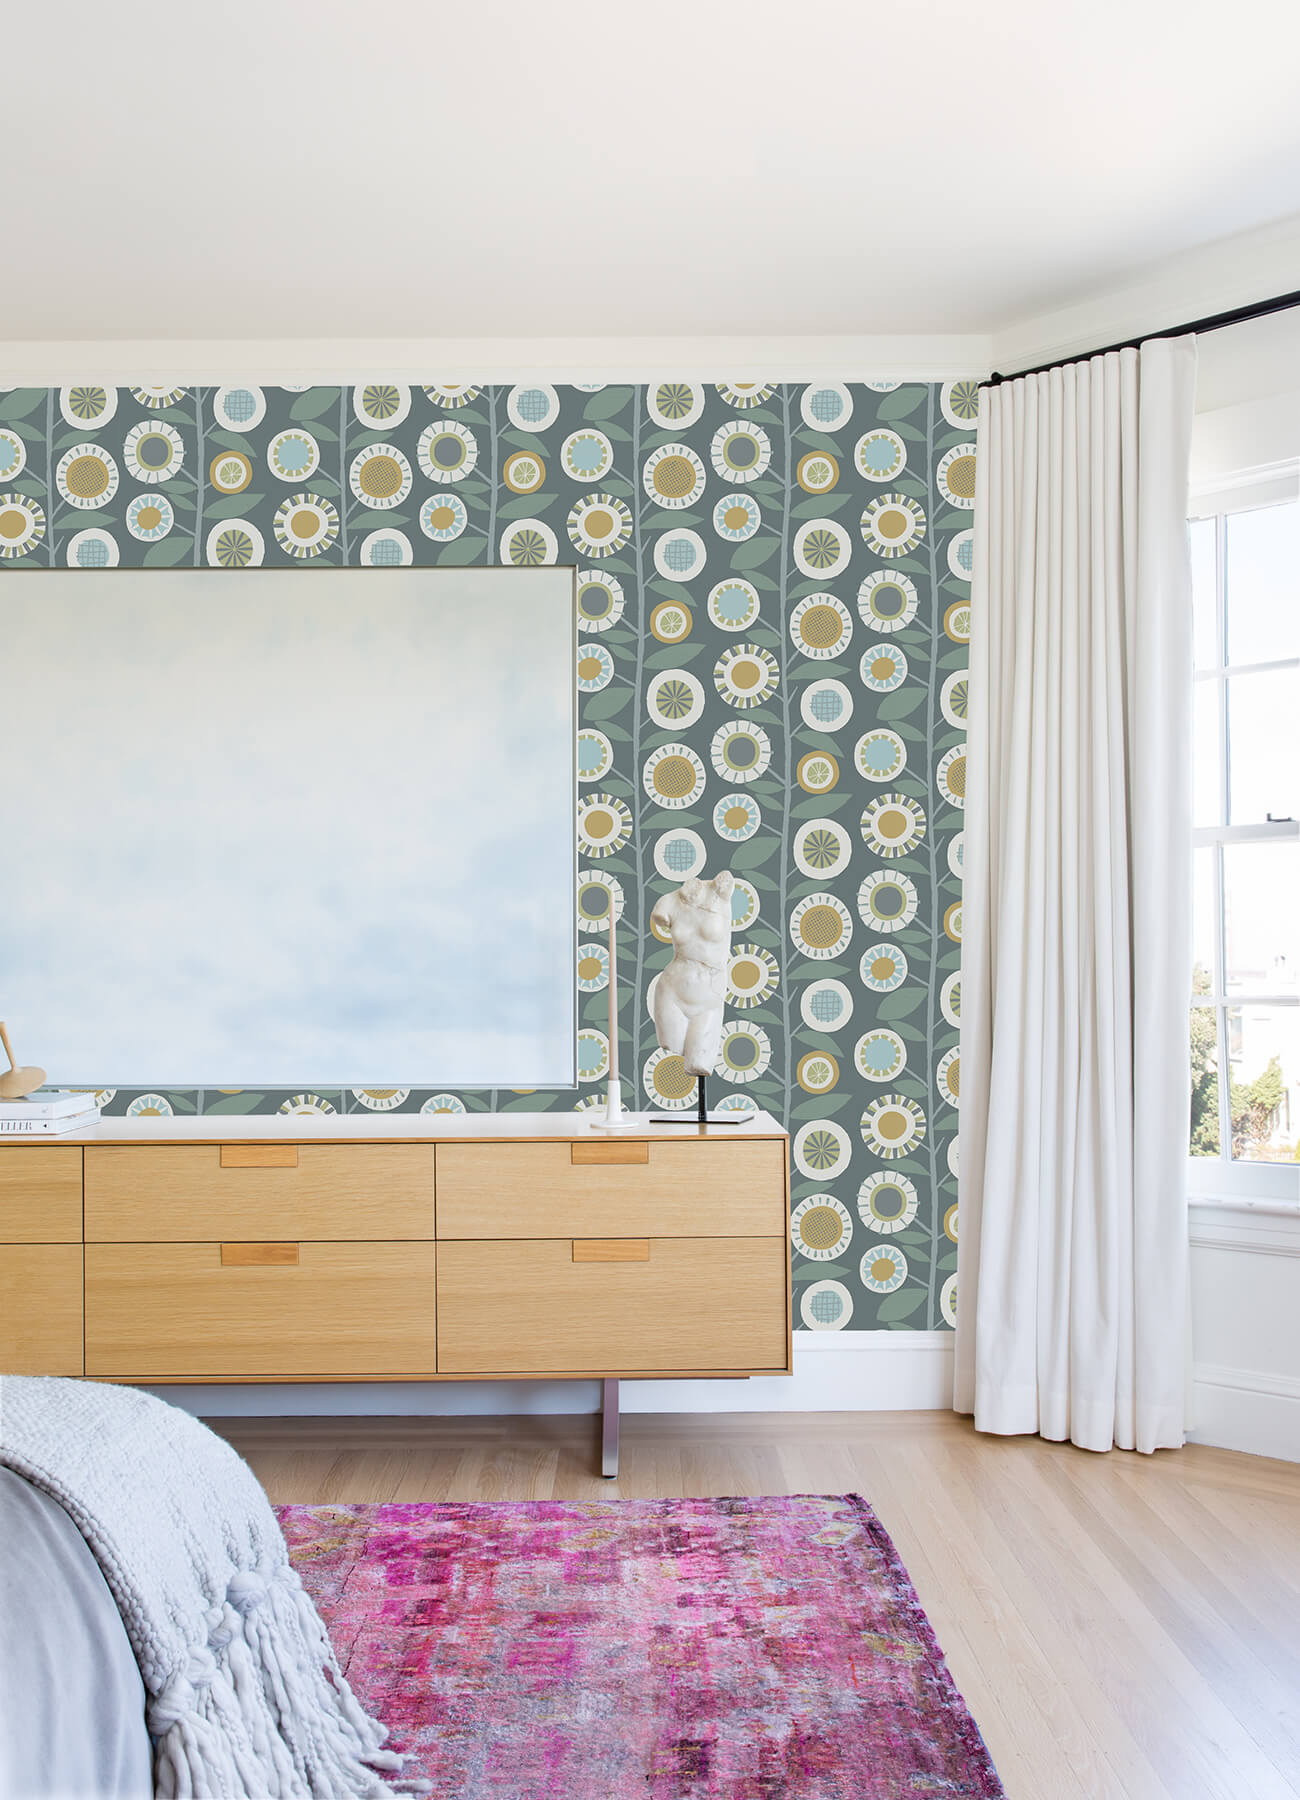 Hannah Sisu Floral Geometric Wallpaper - Grey